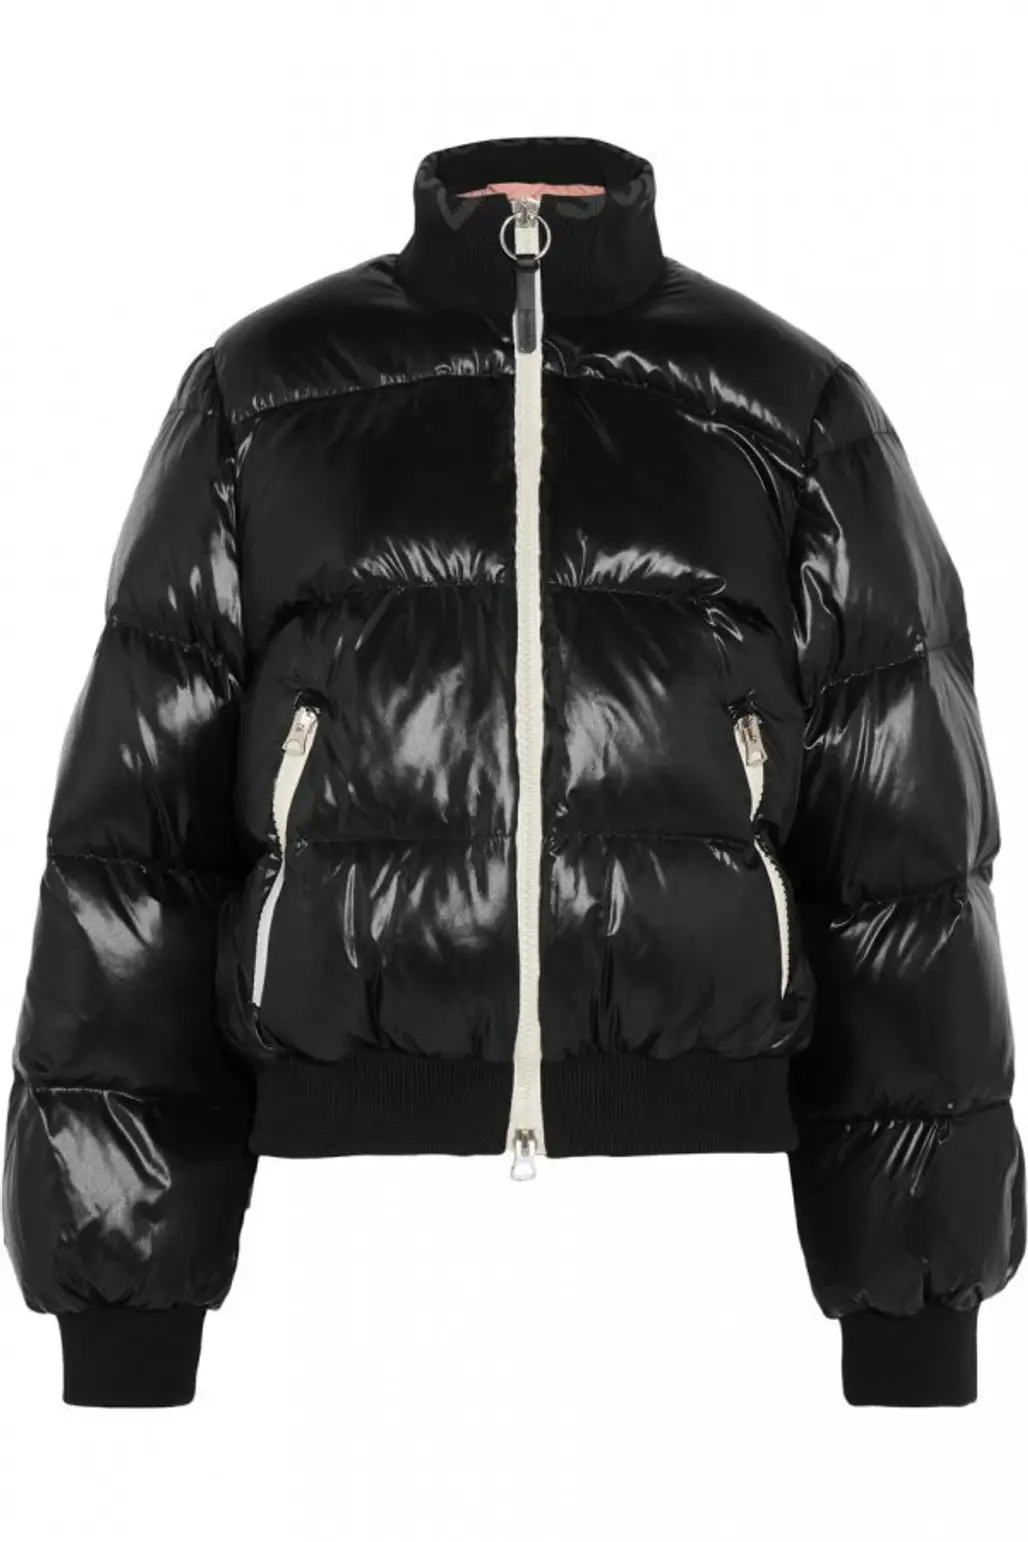 jacket, black, product, hood, leather jacket,